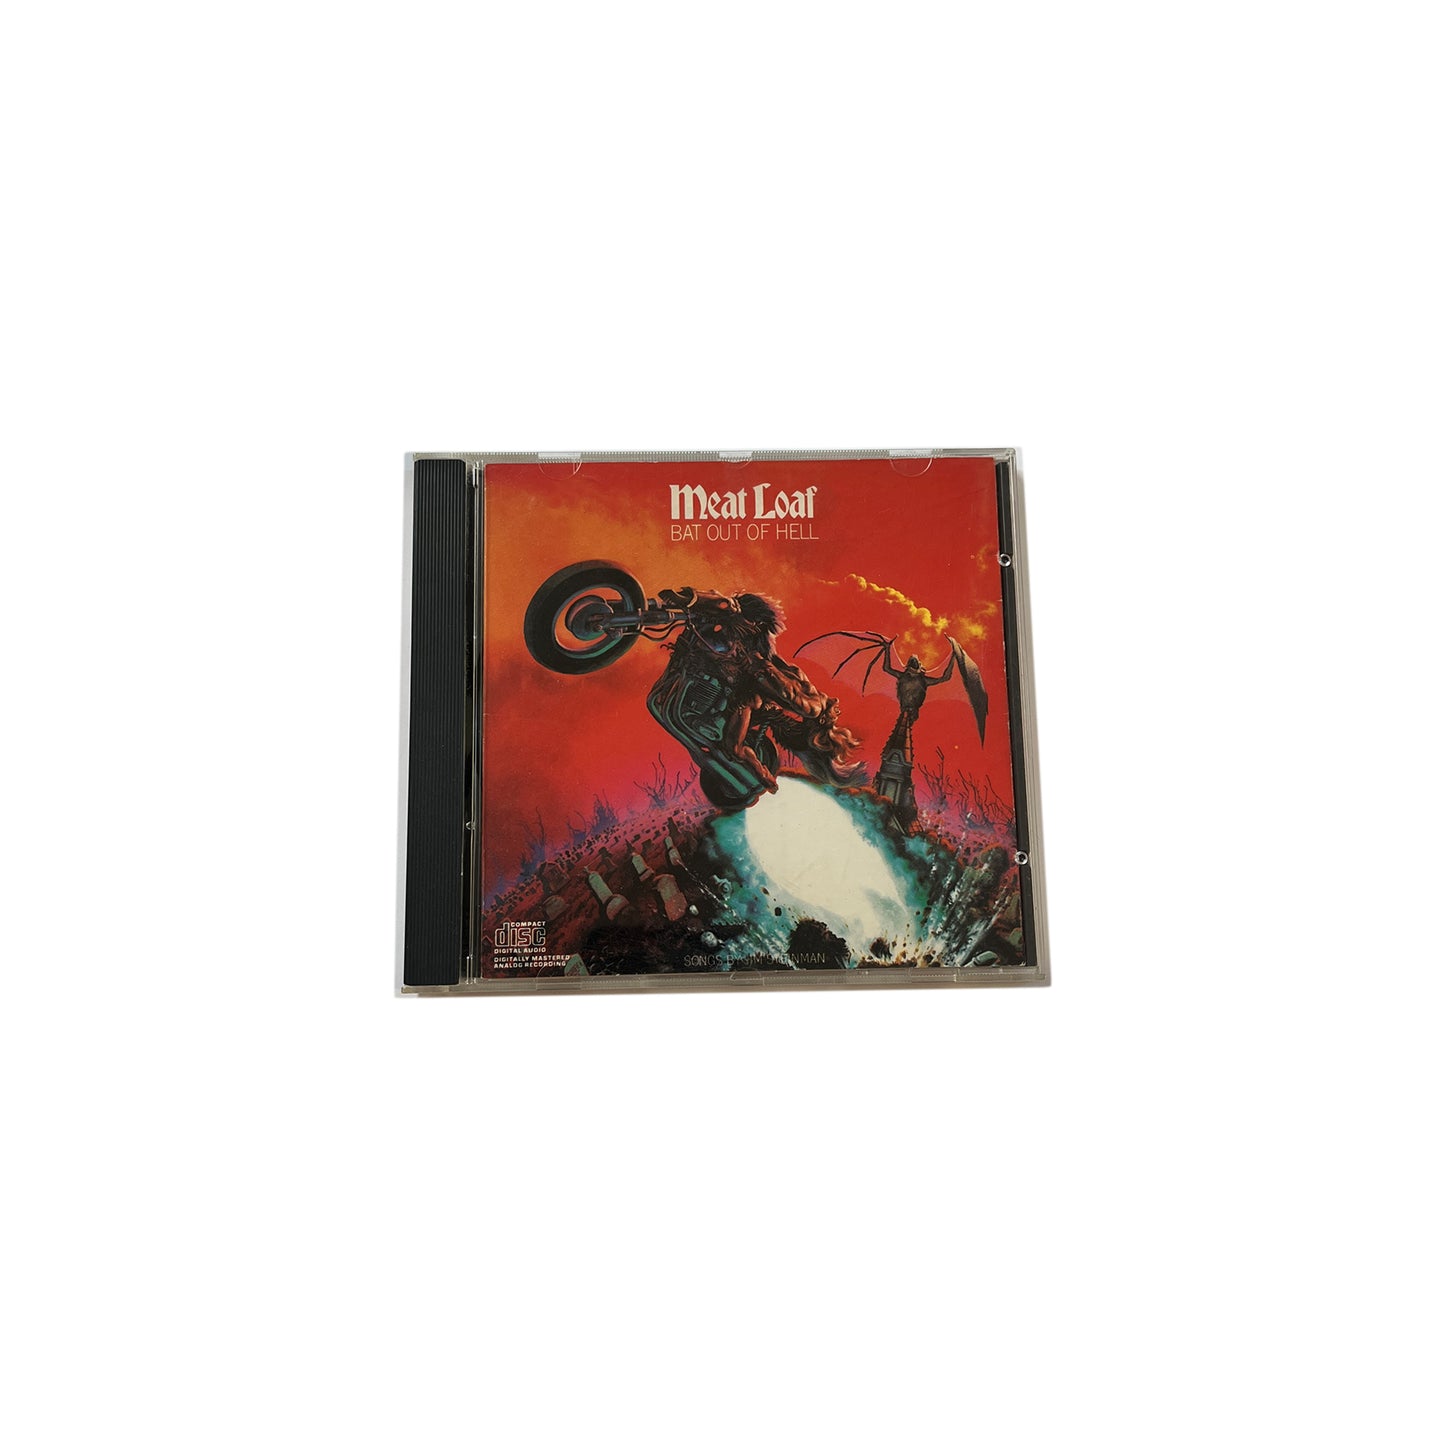 Vintage Meat Loaf CD Bat Out Of Hell